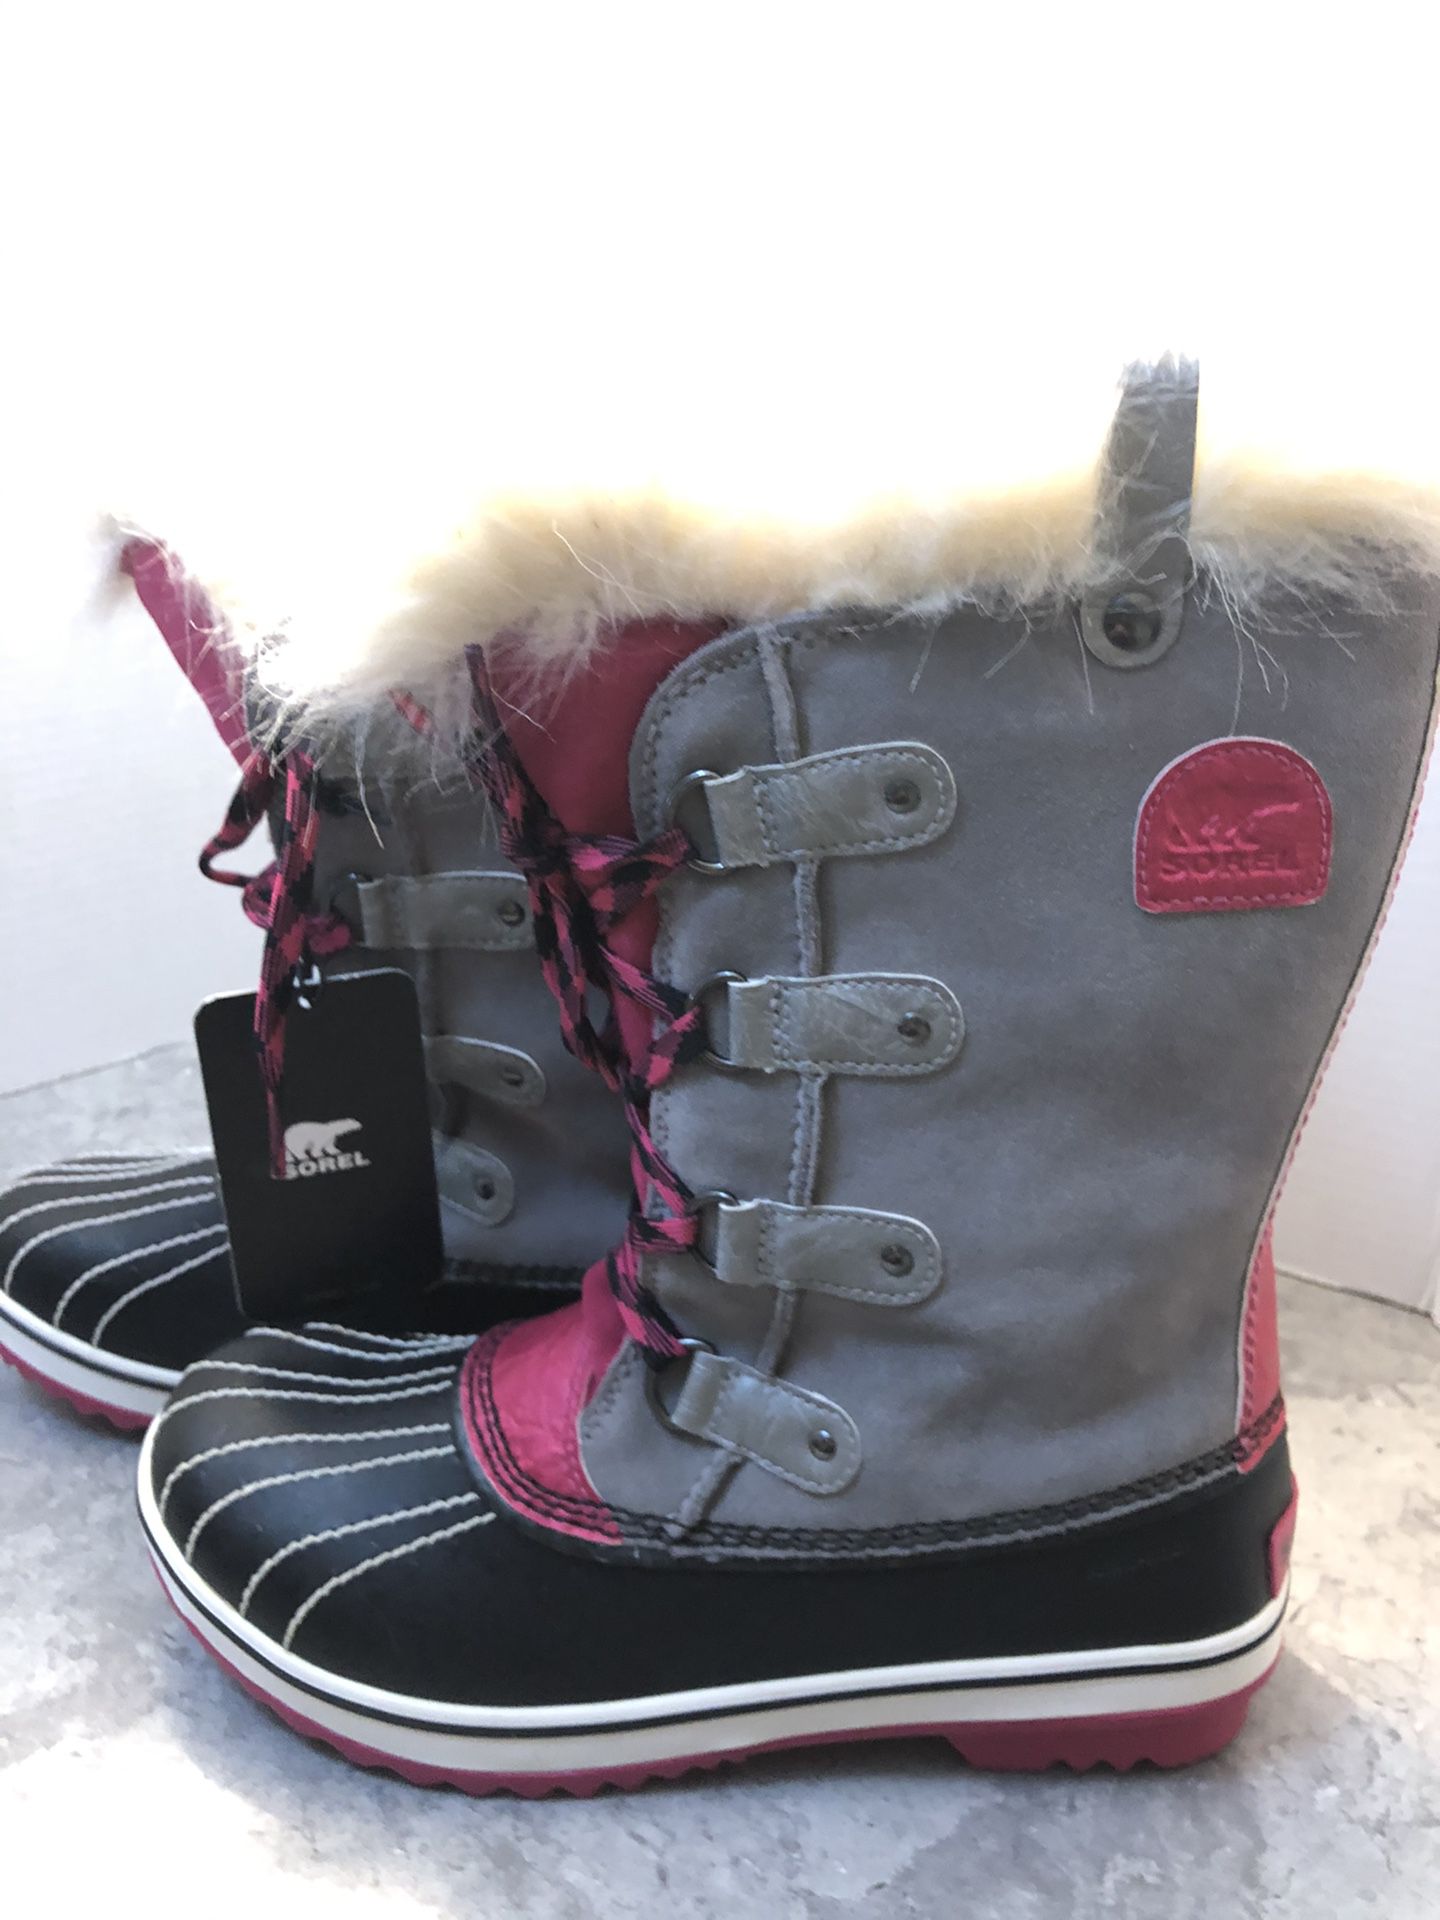 Sorel Tofino Snow Boots - Light Grey / Black Size: 7 Youth